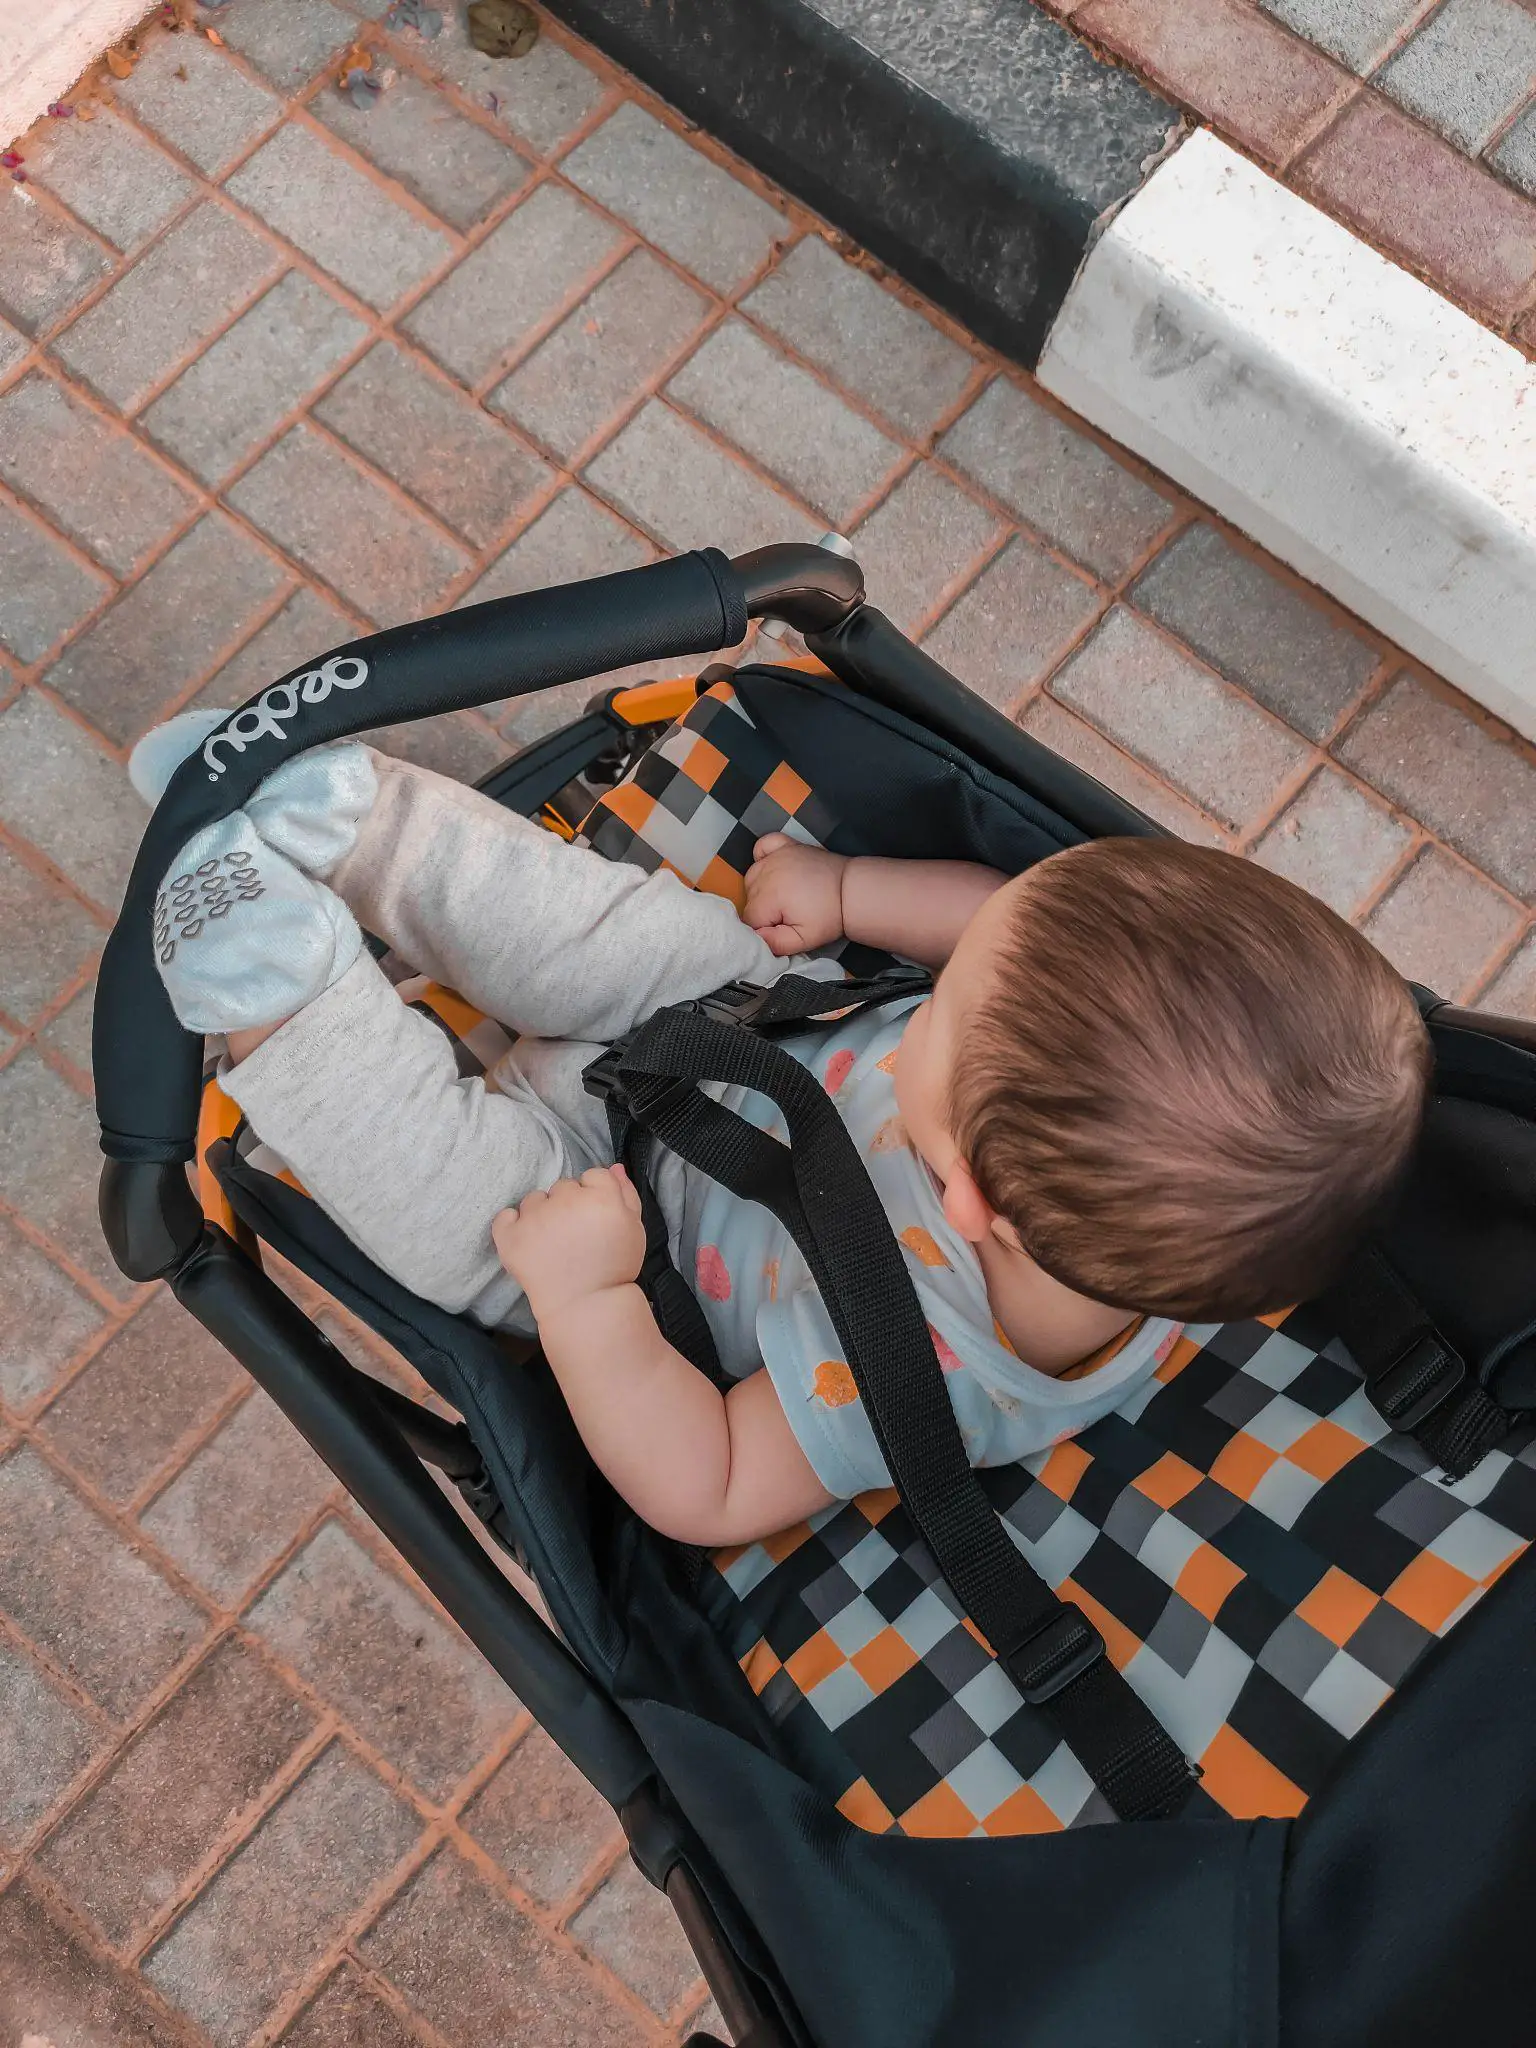 Baby Sitting in a Modular Stroller | Best Reversible Stroller | Baby Journey